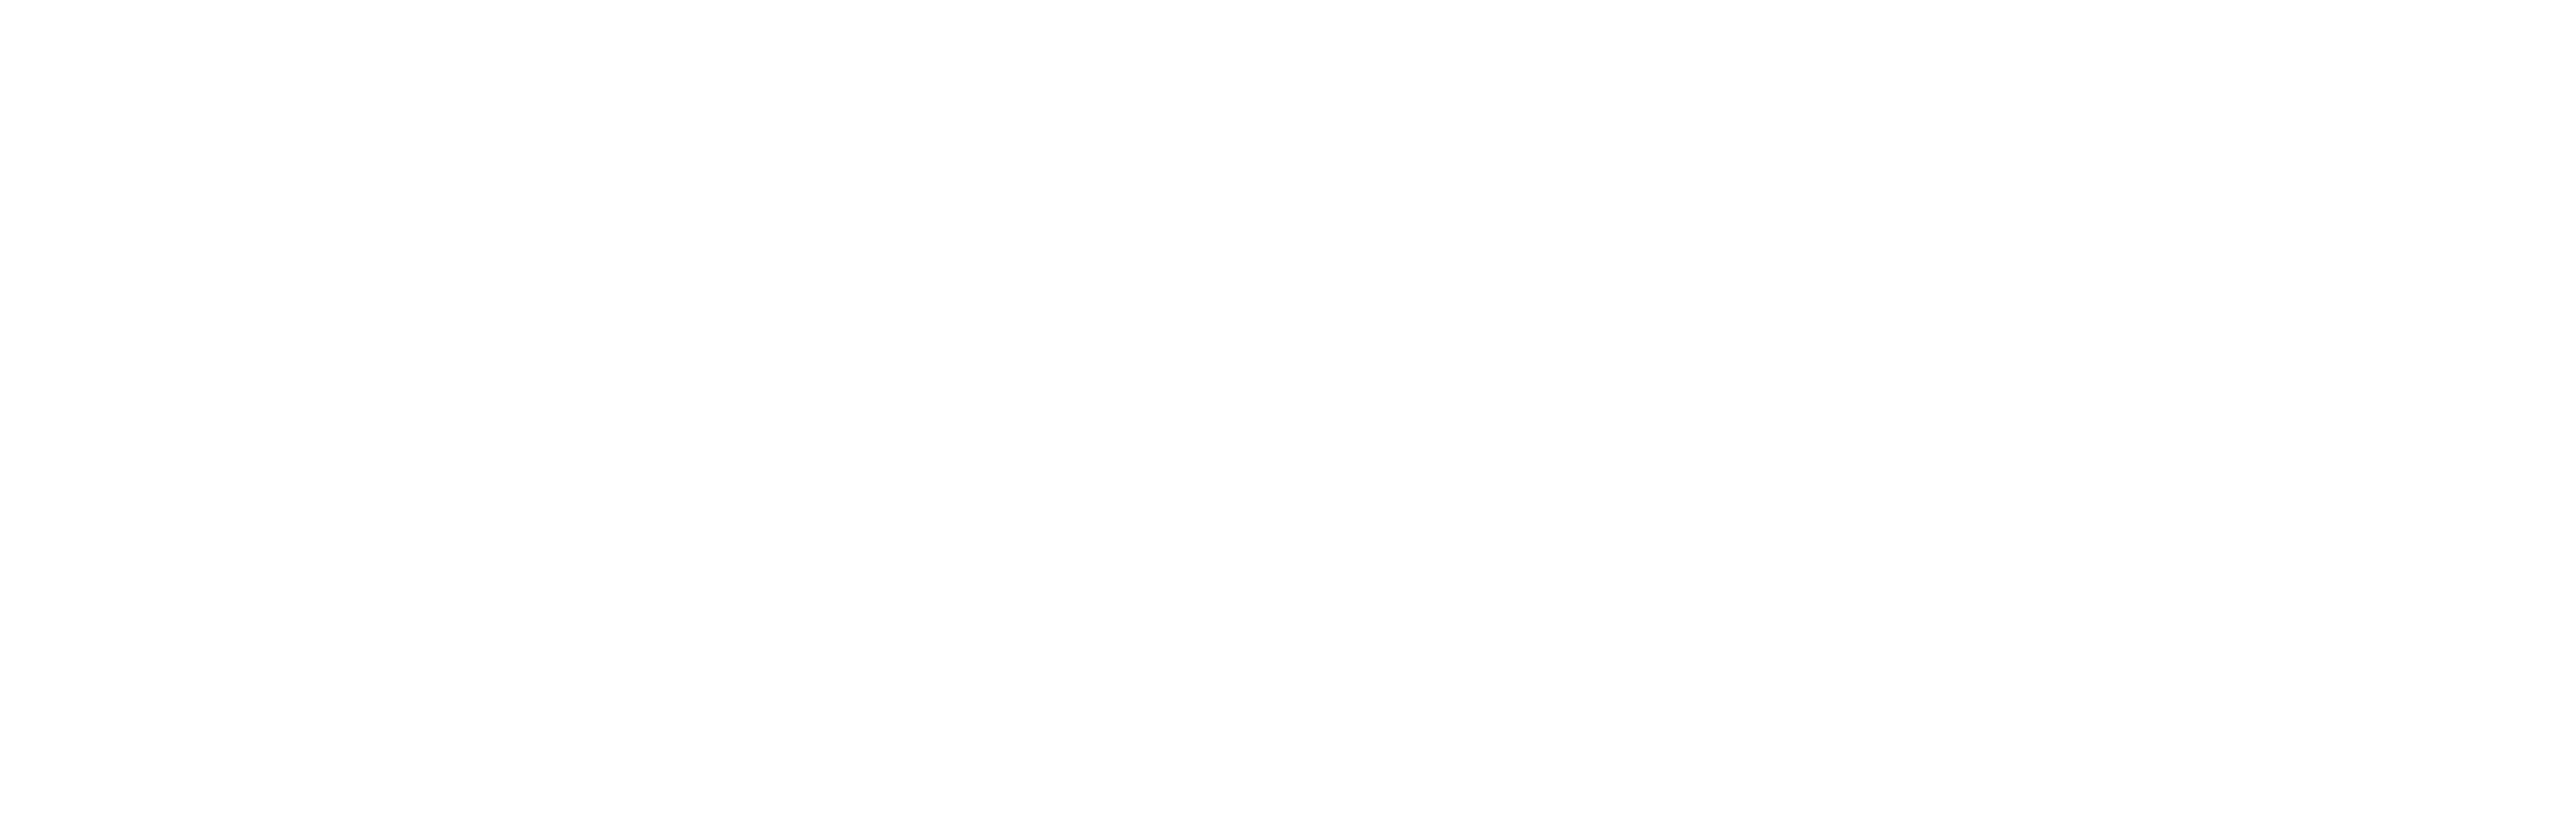 Premier Practice Accelerator